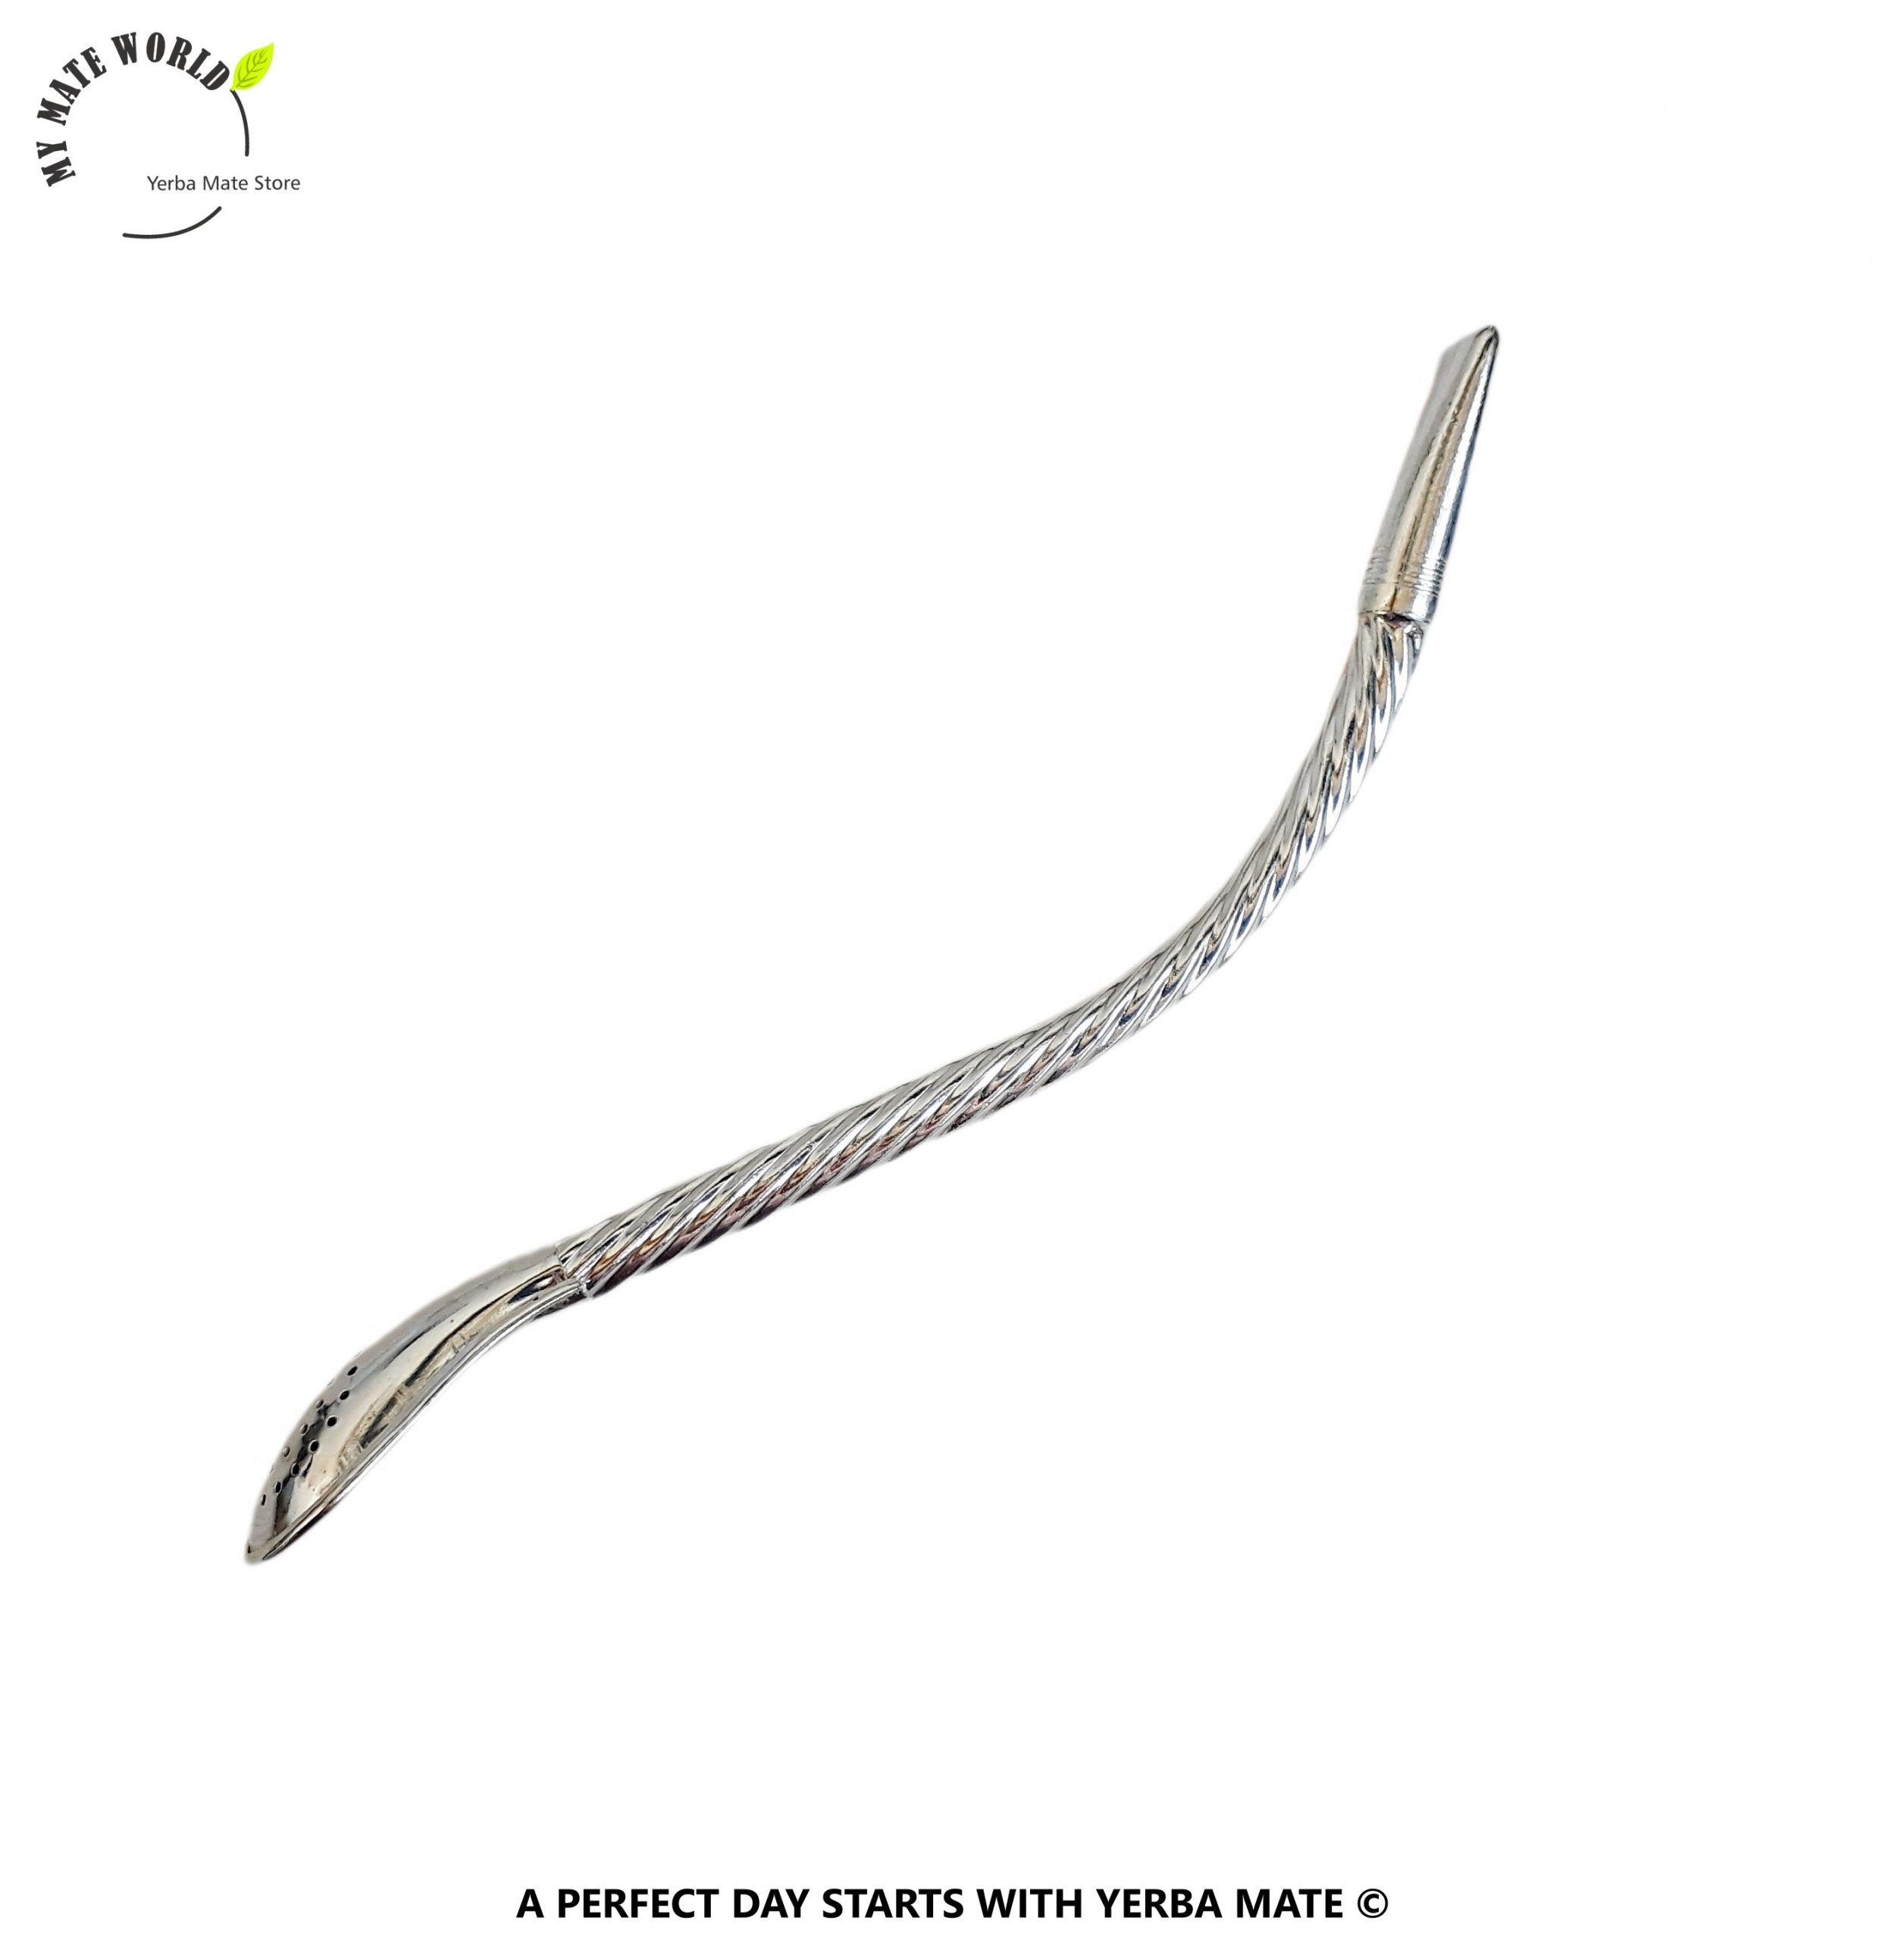 Buiten adem Historicus Gemarkeerd Braided" Spoon Style Curved Alpaca Silver Yerba Mate Bombilla - 7.5" Length  - My Mate World - Yerba Mate Store